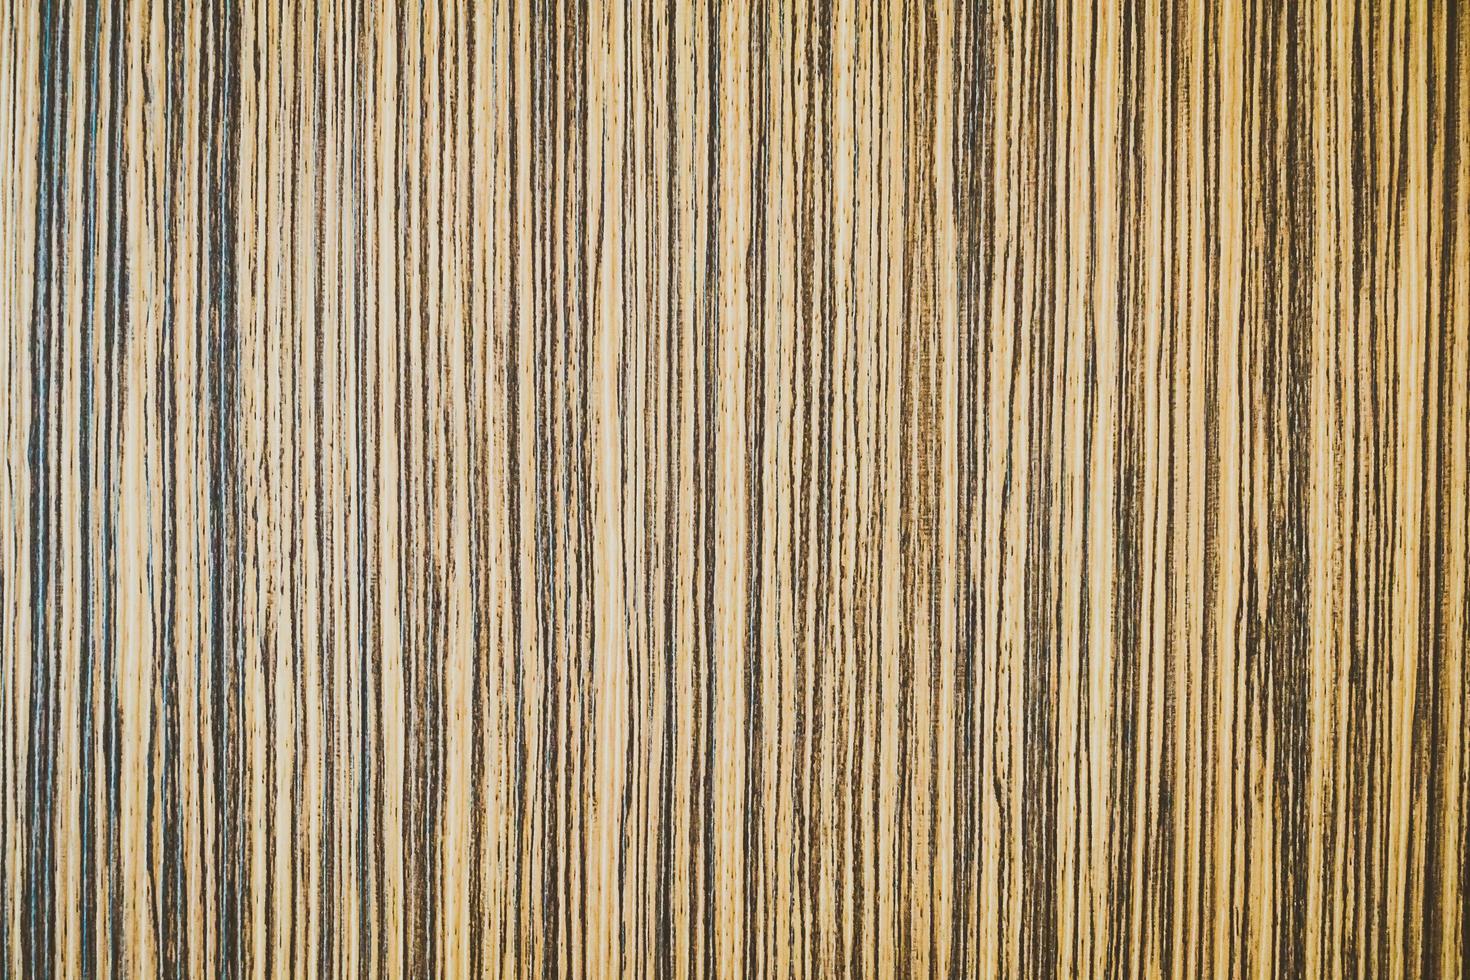 textura de madera para el fondo foto